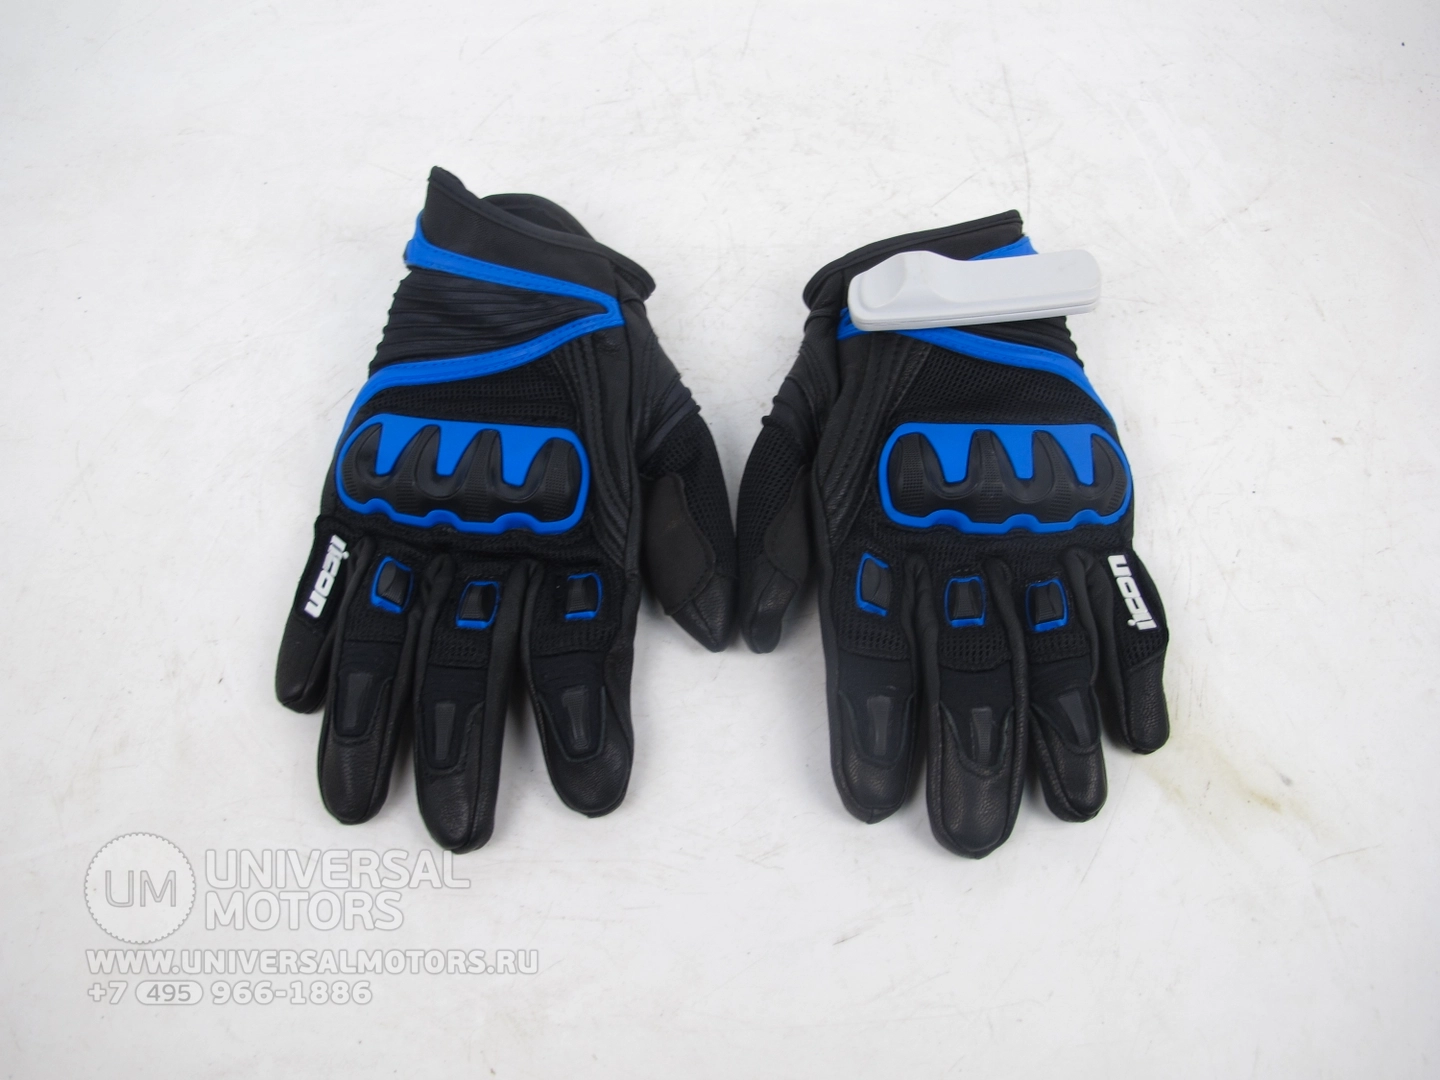 Перчатки ICON COMPOUND SHORT BLUE, Тип техники avito 6-416